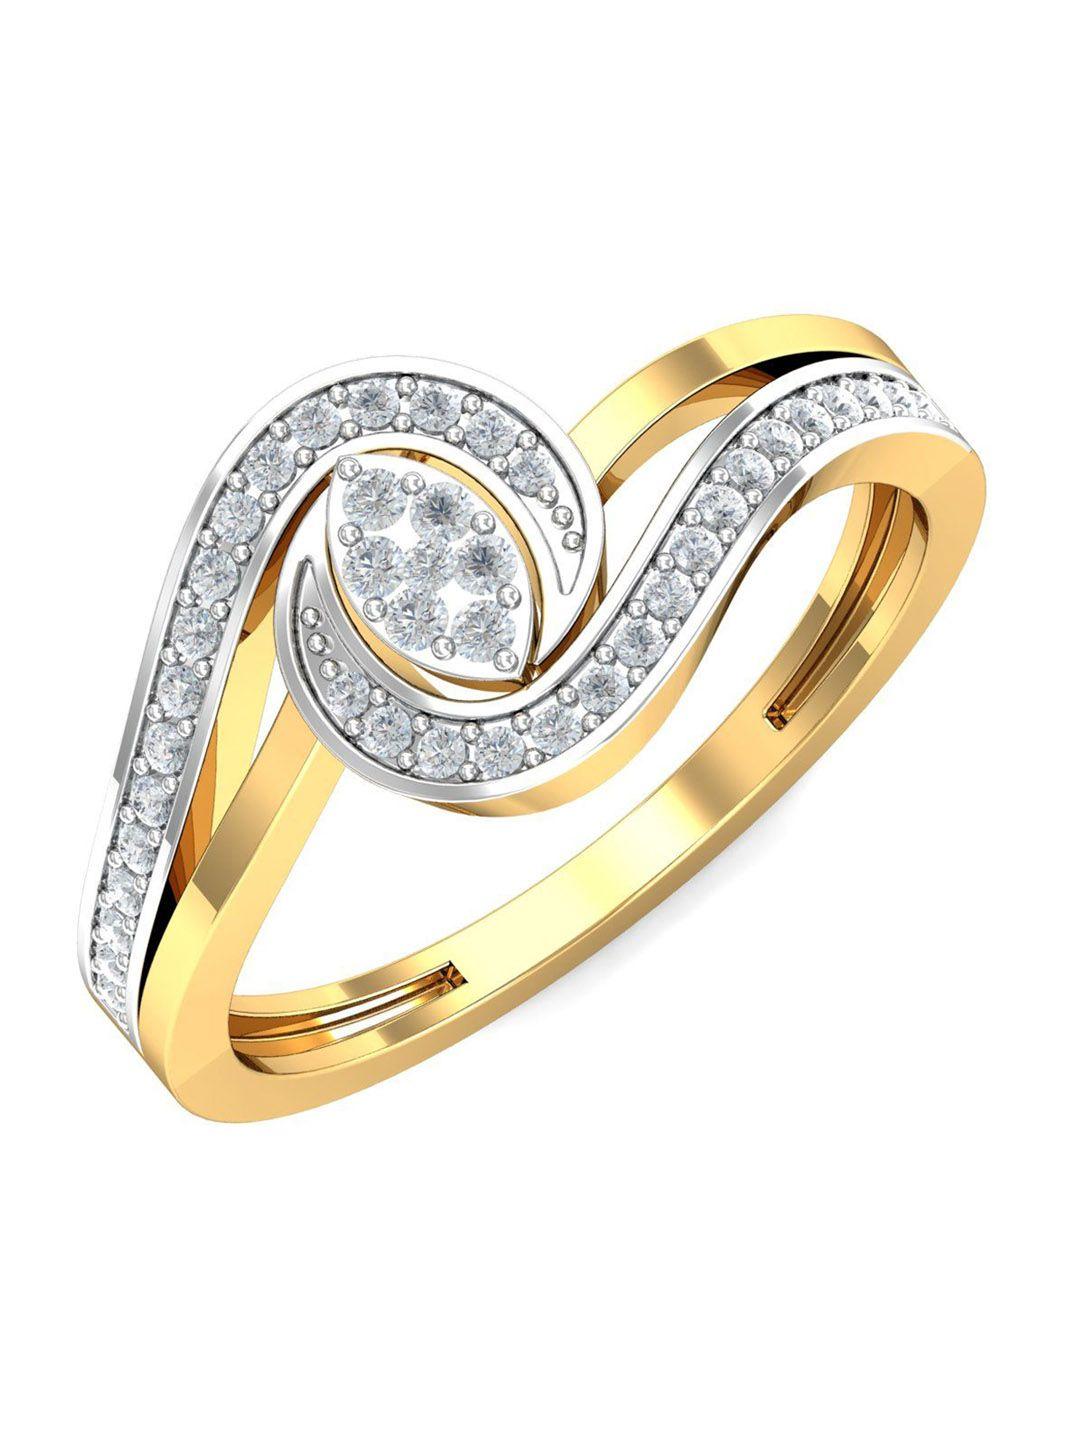 kuberbox joanna 18kt gold diamond studded ring-2.93gm